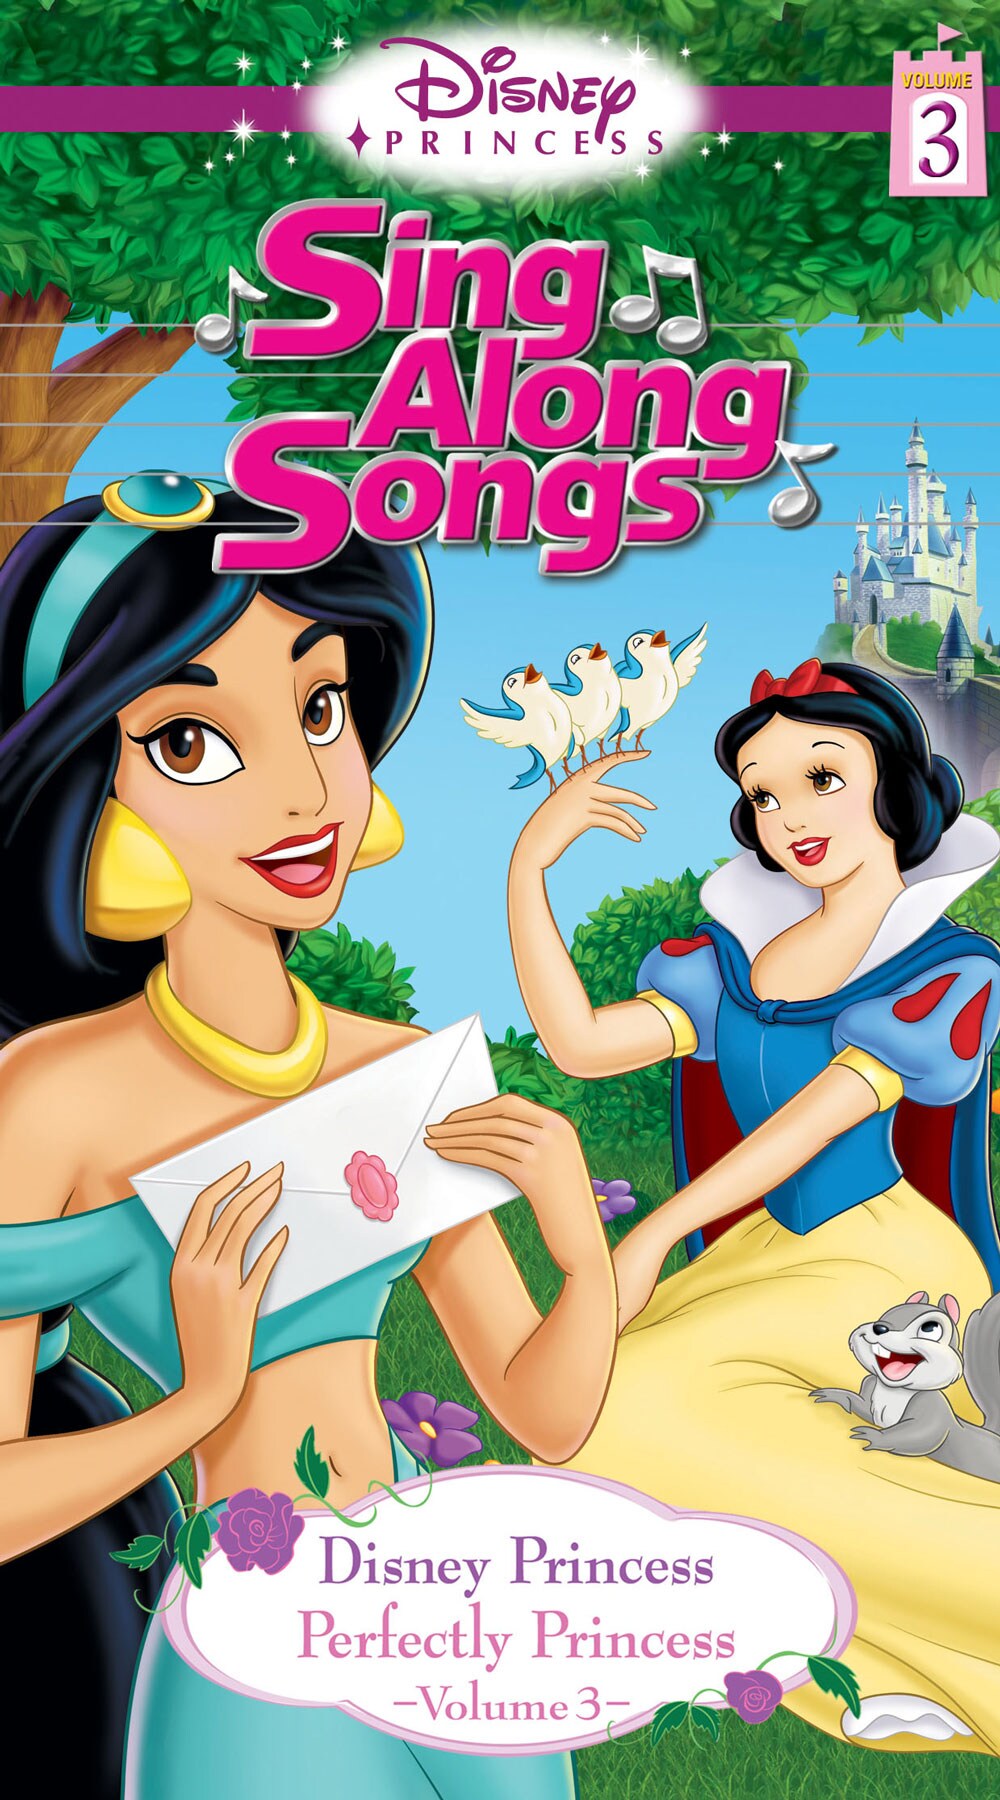 disney princess sing along songs vol 1 vhs